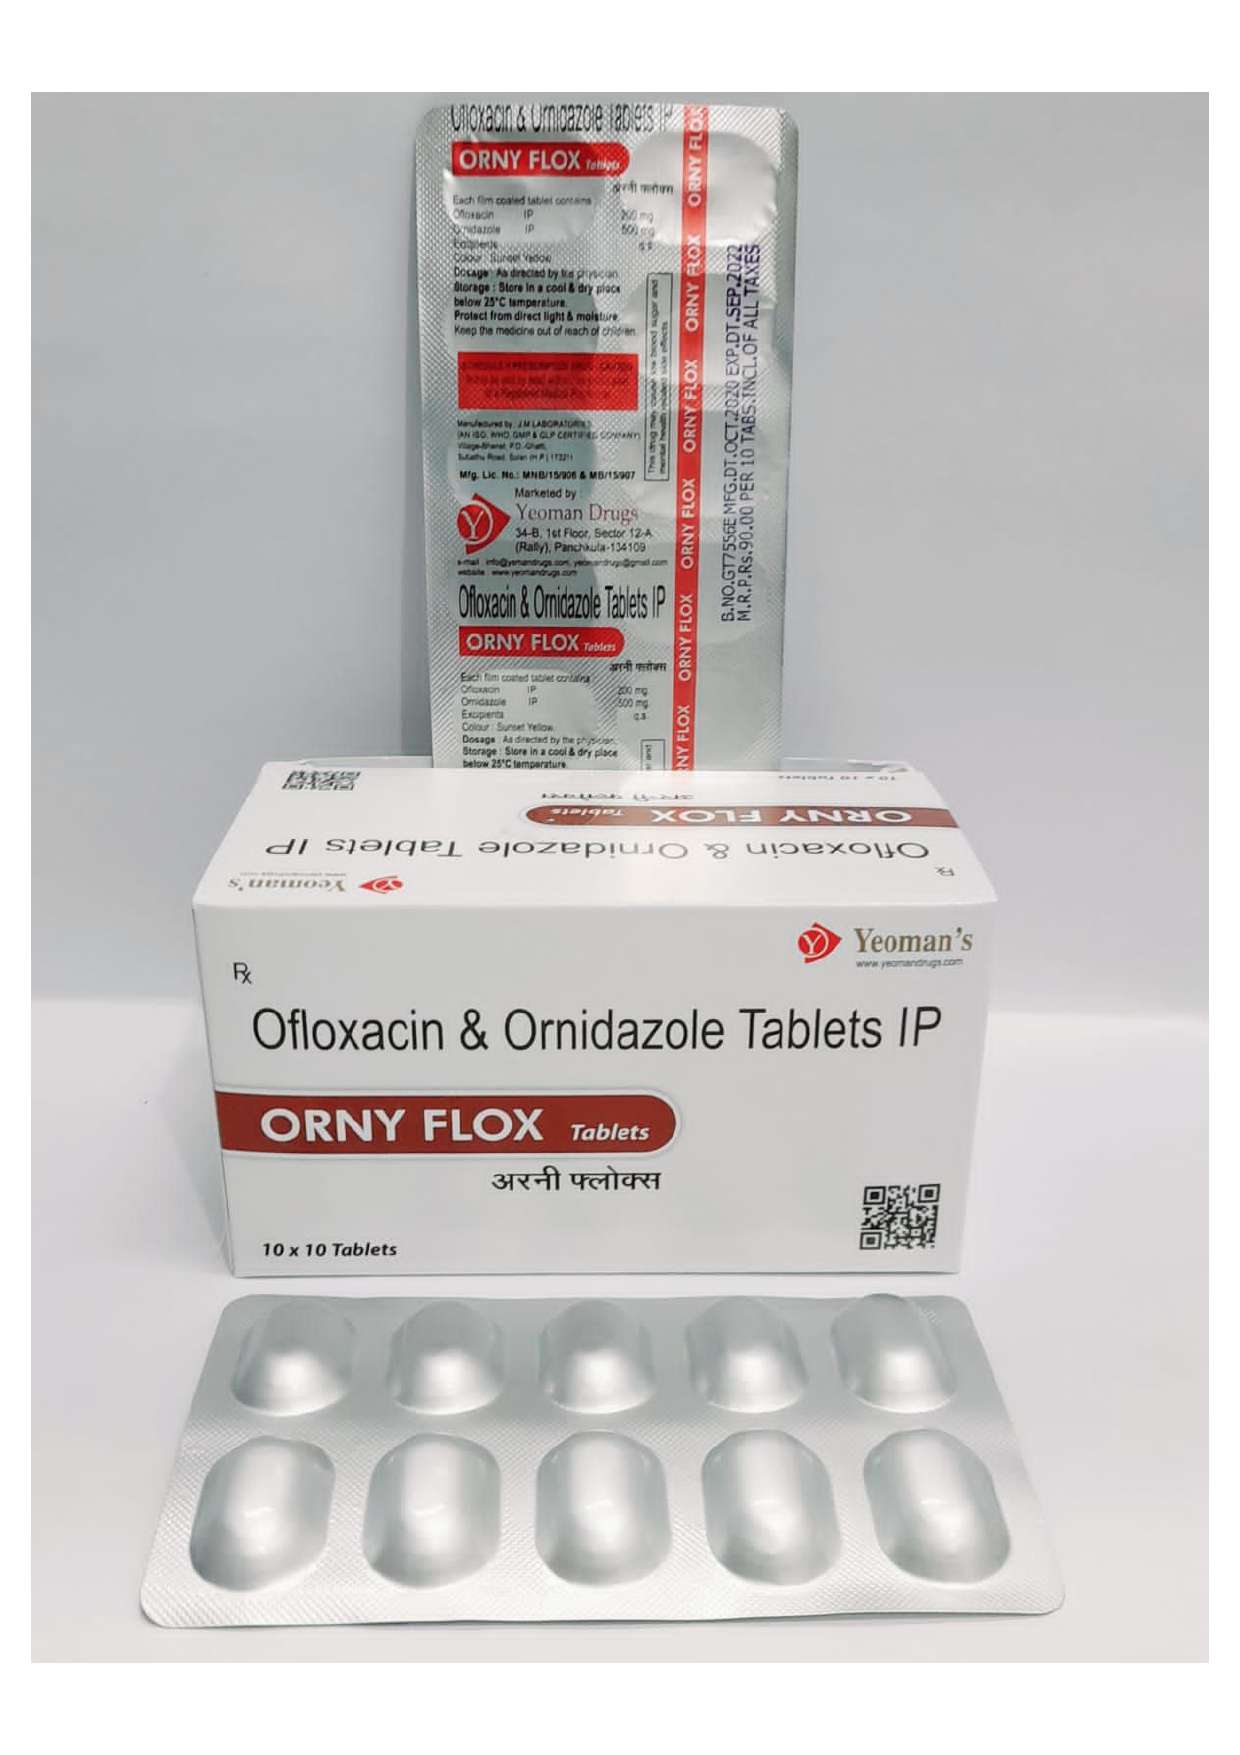 ofloxacin 200mg + ornidazole 500 mg. + lactic acid bacillus 60 million
spores